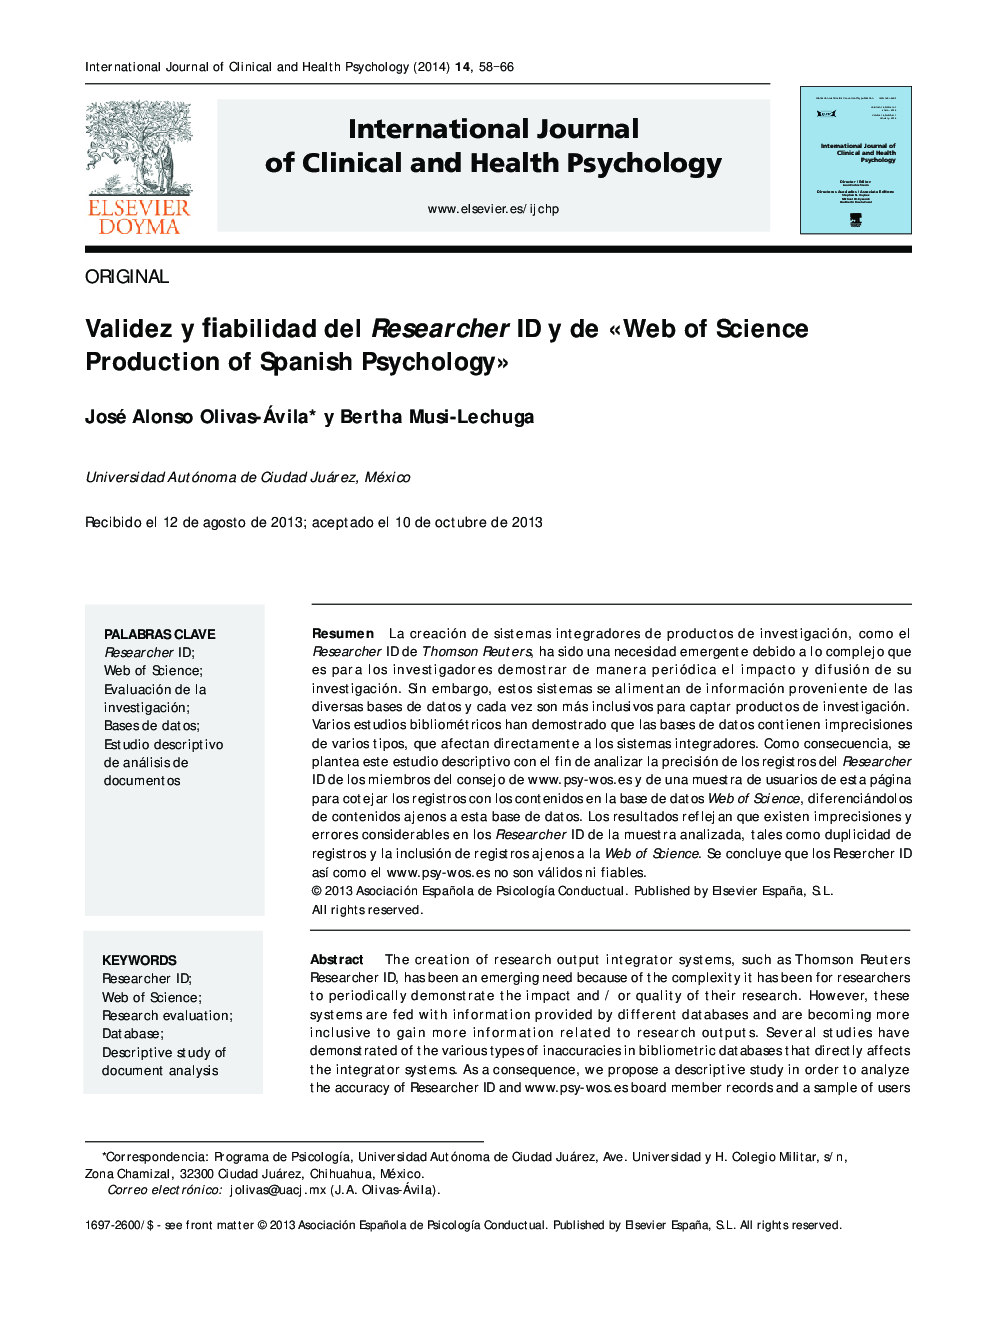 Validez y fiabilidad del Researcher ID y de «Web of Science Production of Spanish Psychology»